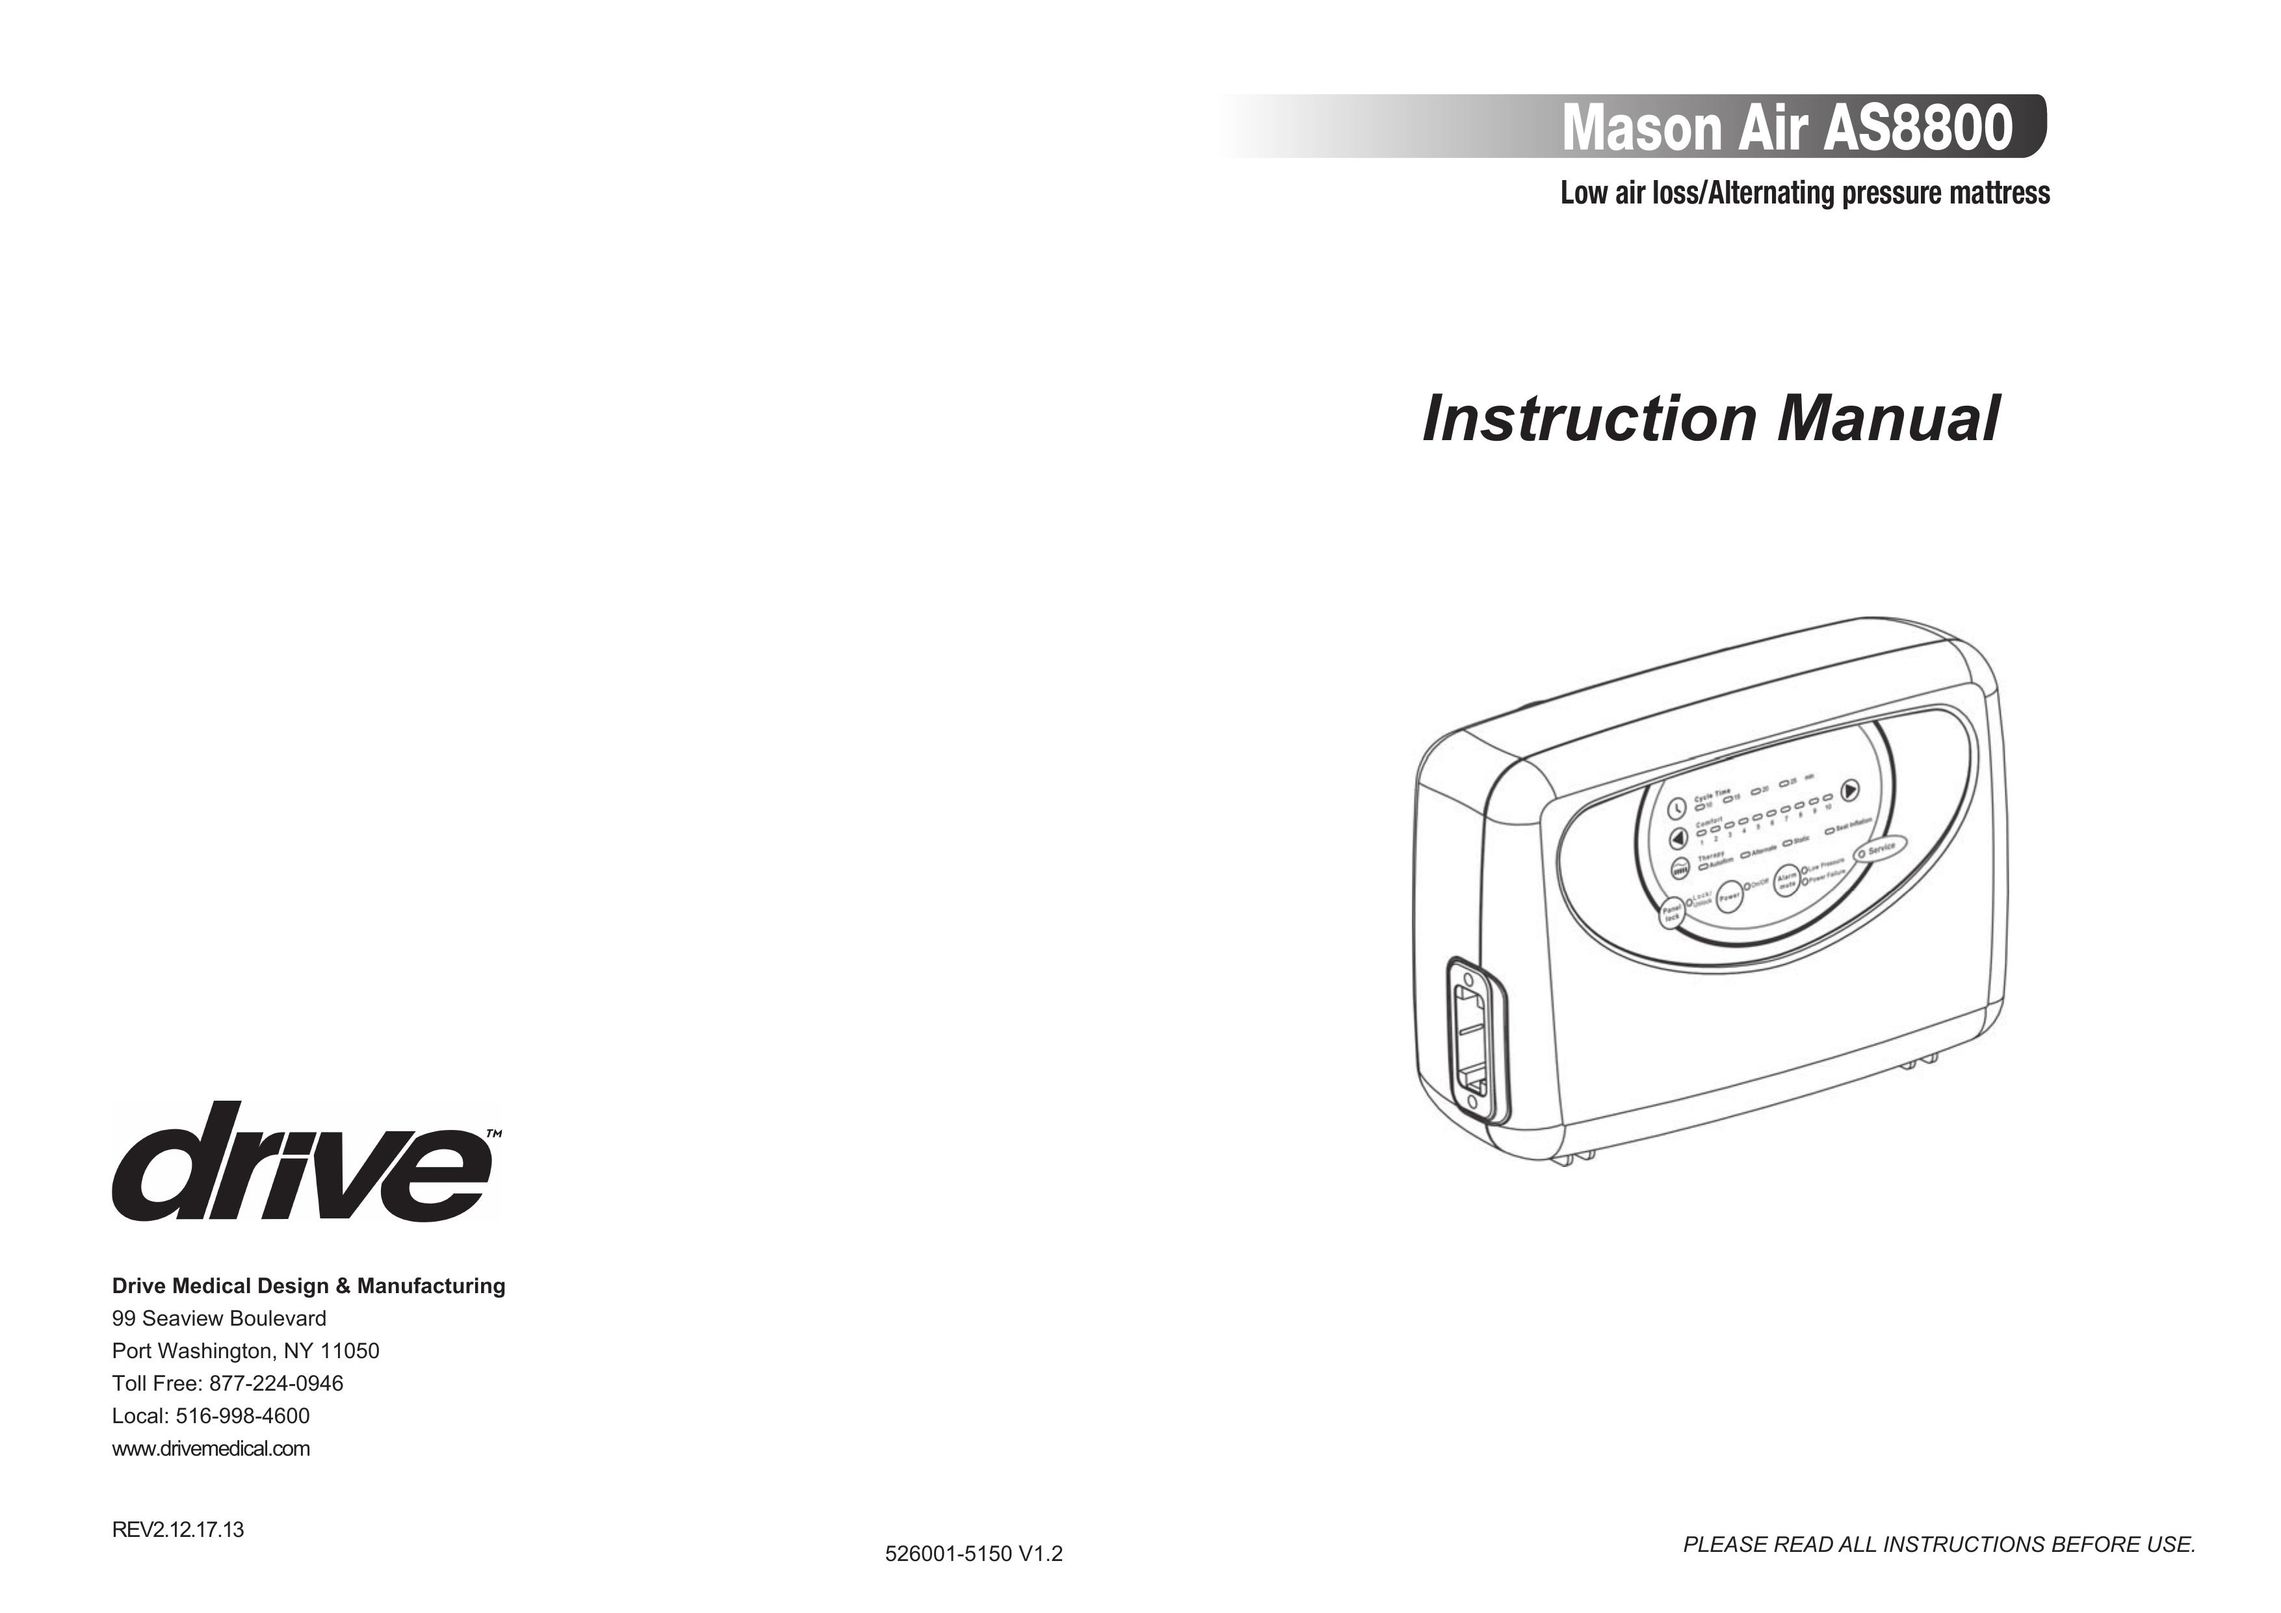 Drive Medical Design Mason Air AS8800 Camping Equipment User Manual